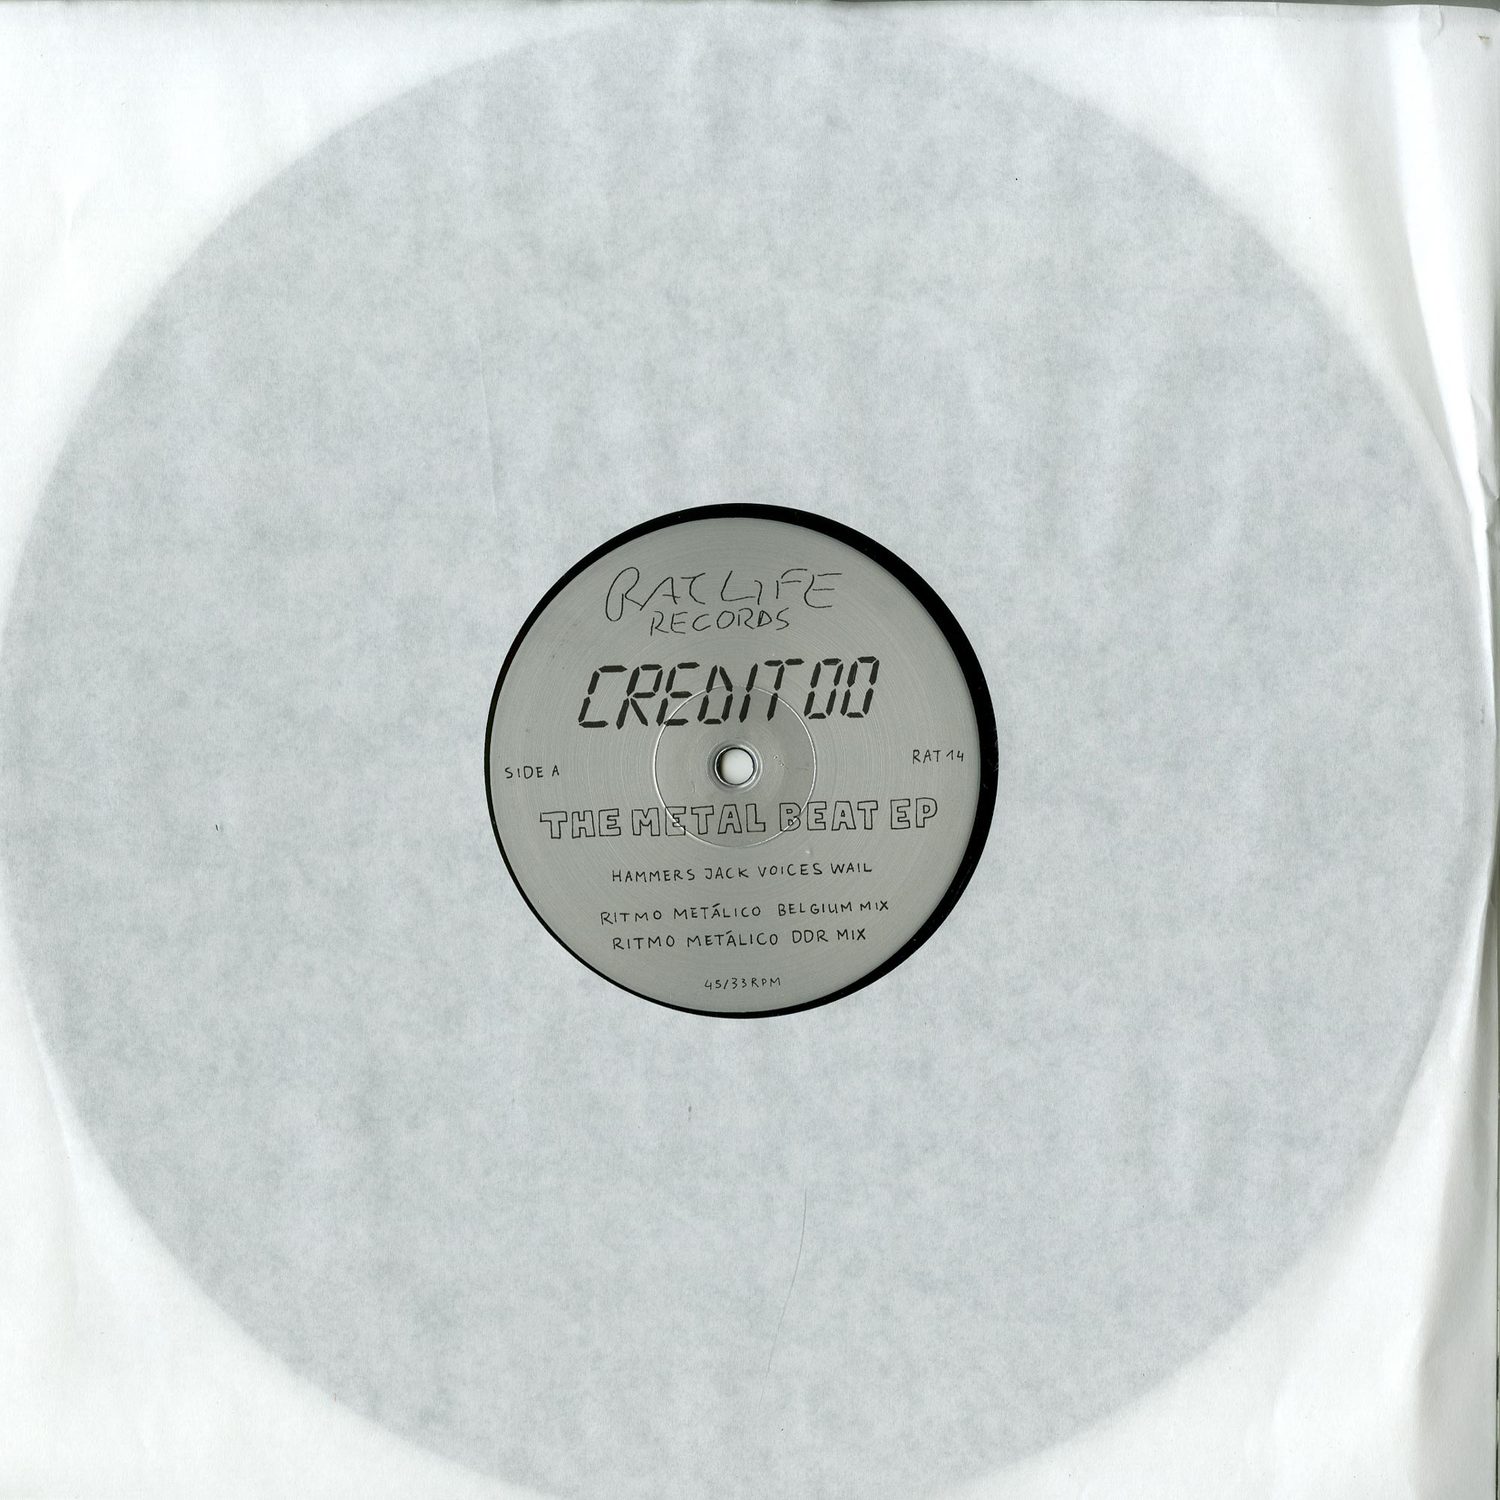 Credit 00 - THE METAL BEAT EP 